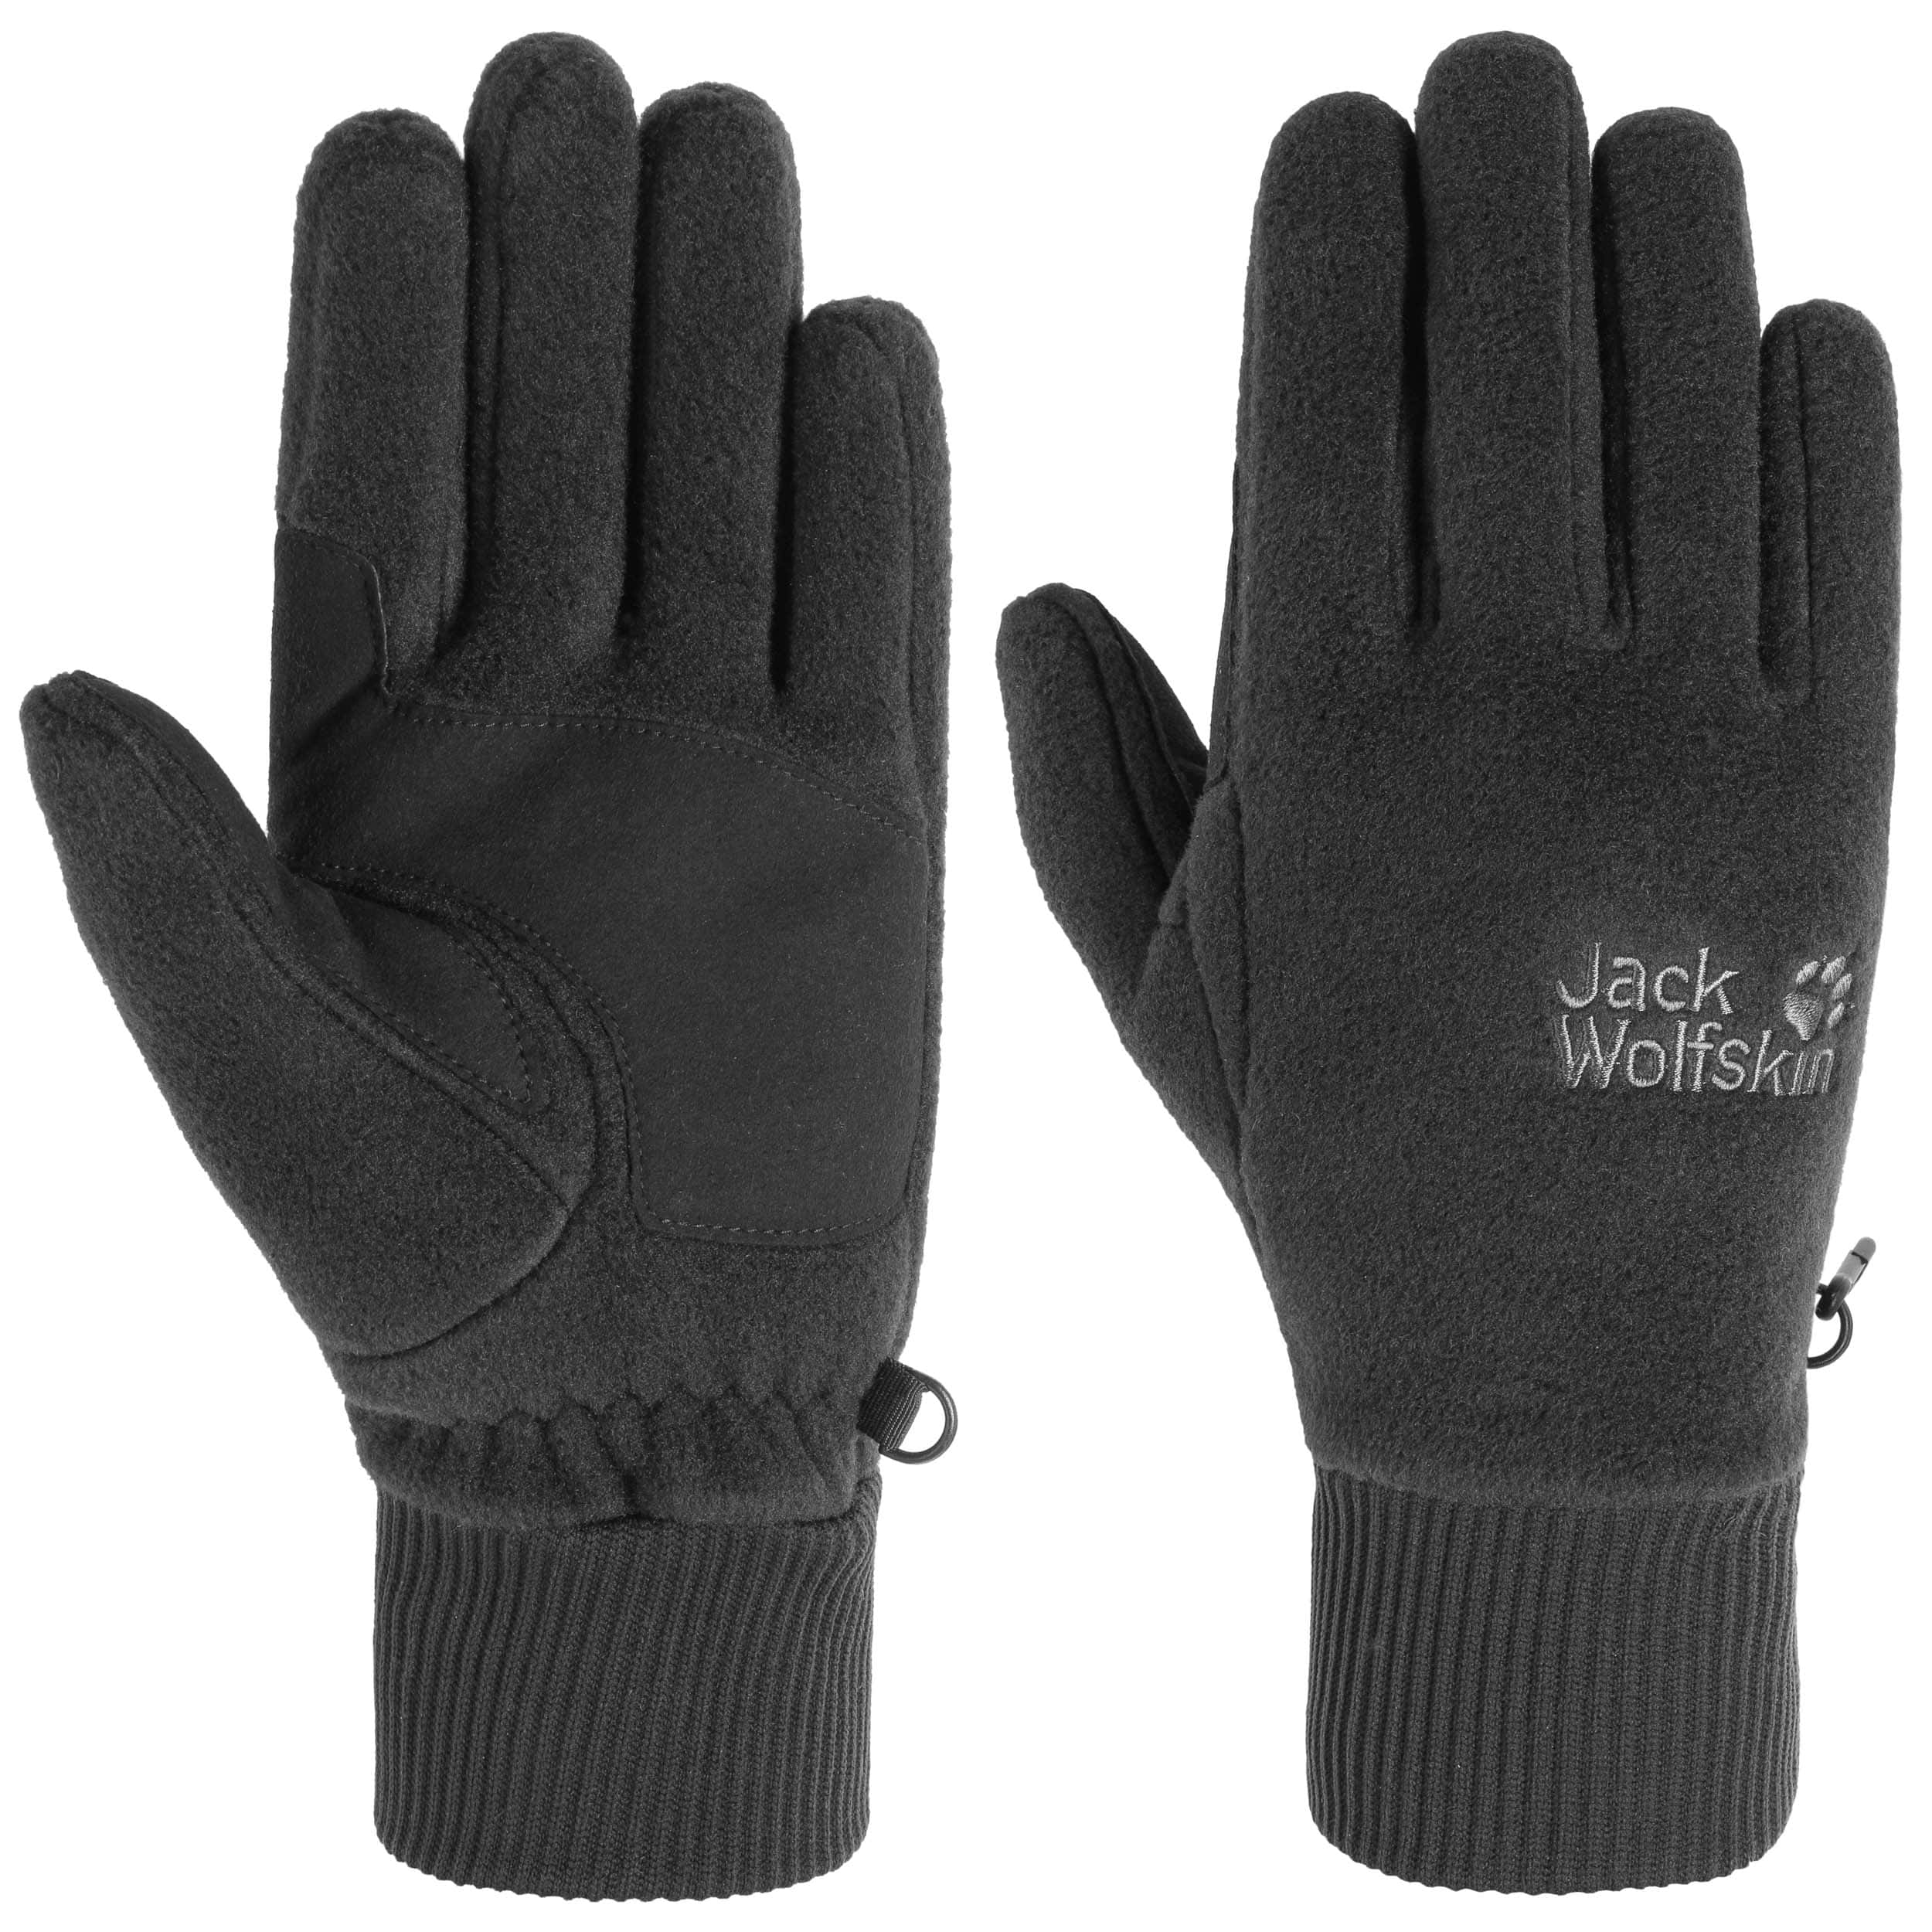 Vertigo Fleece Gloves by Jack 37,95 - € Wolfskin